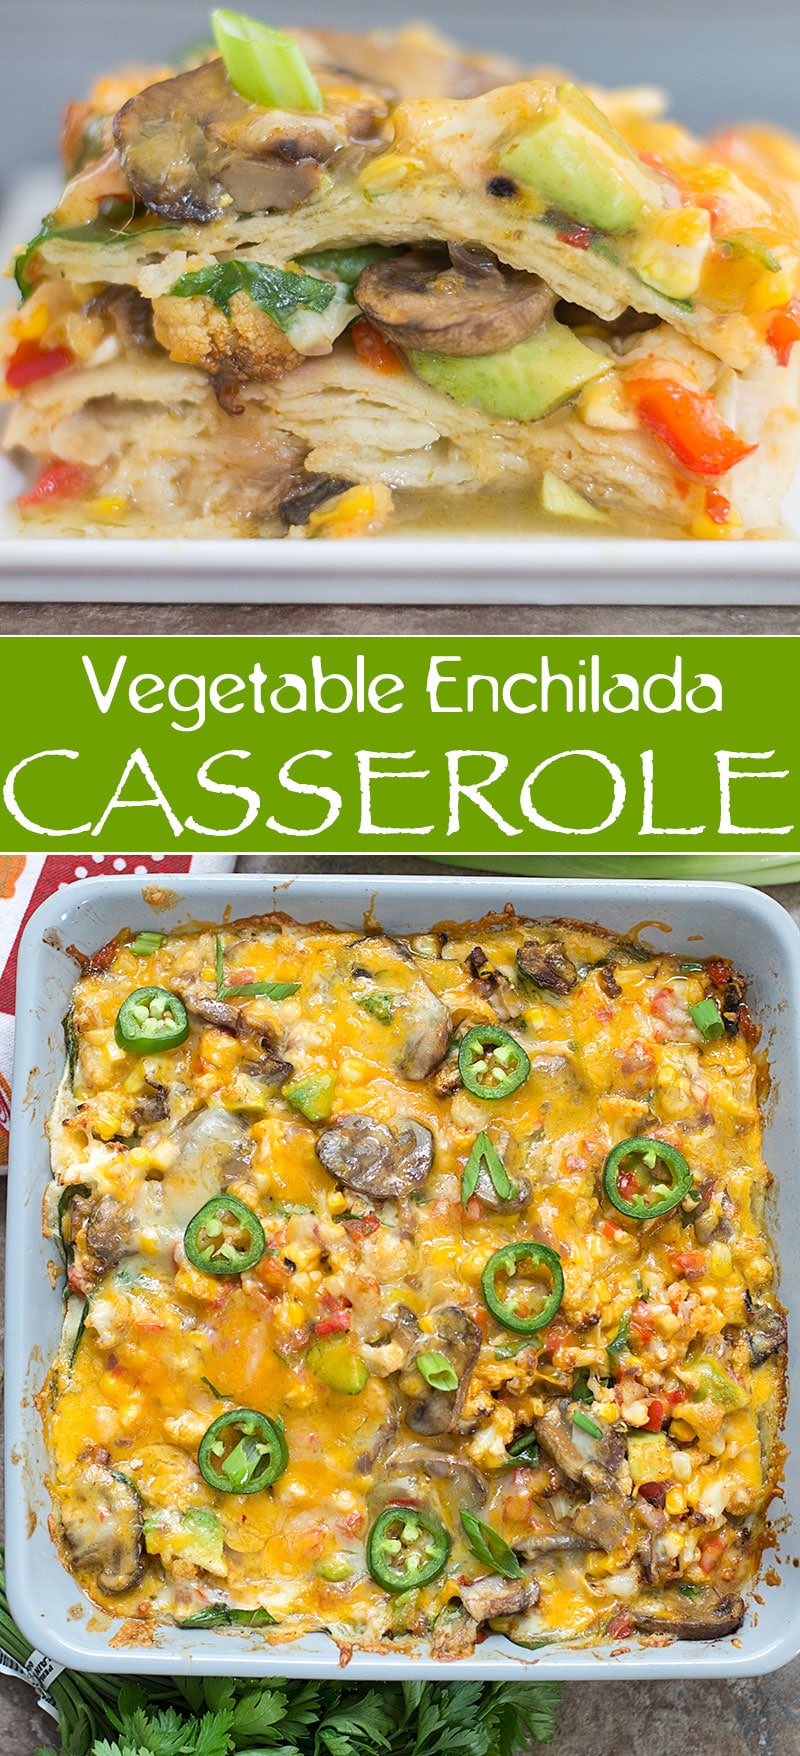 Vegetable Enchilada Casserole | - Healing Tomato Recipes